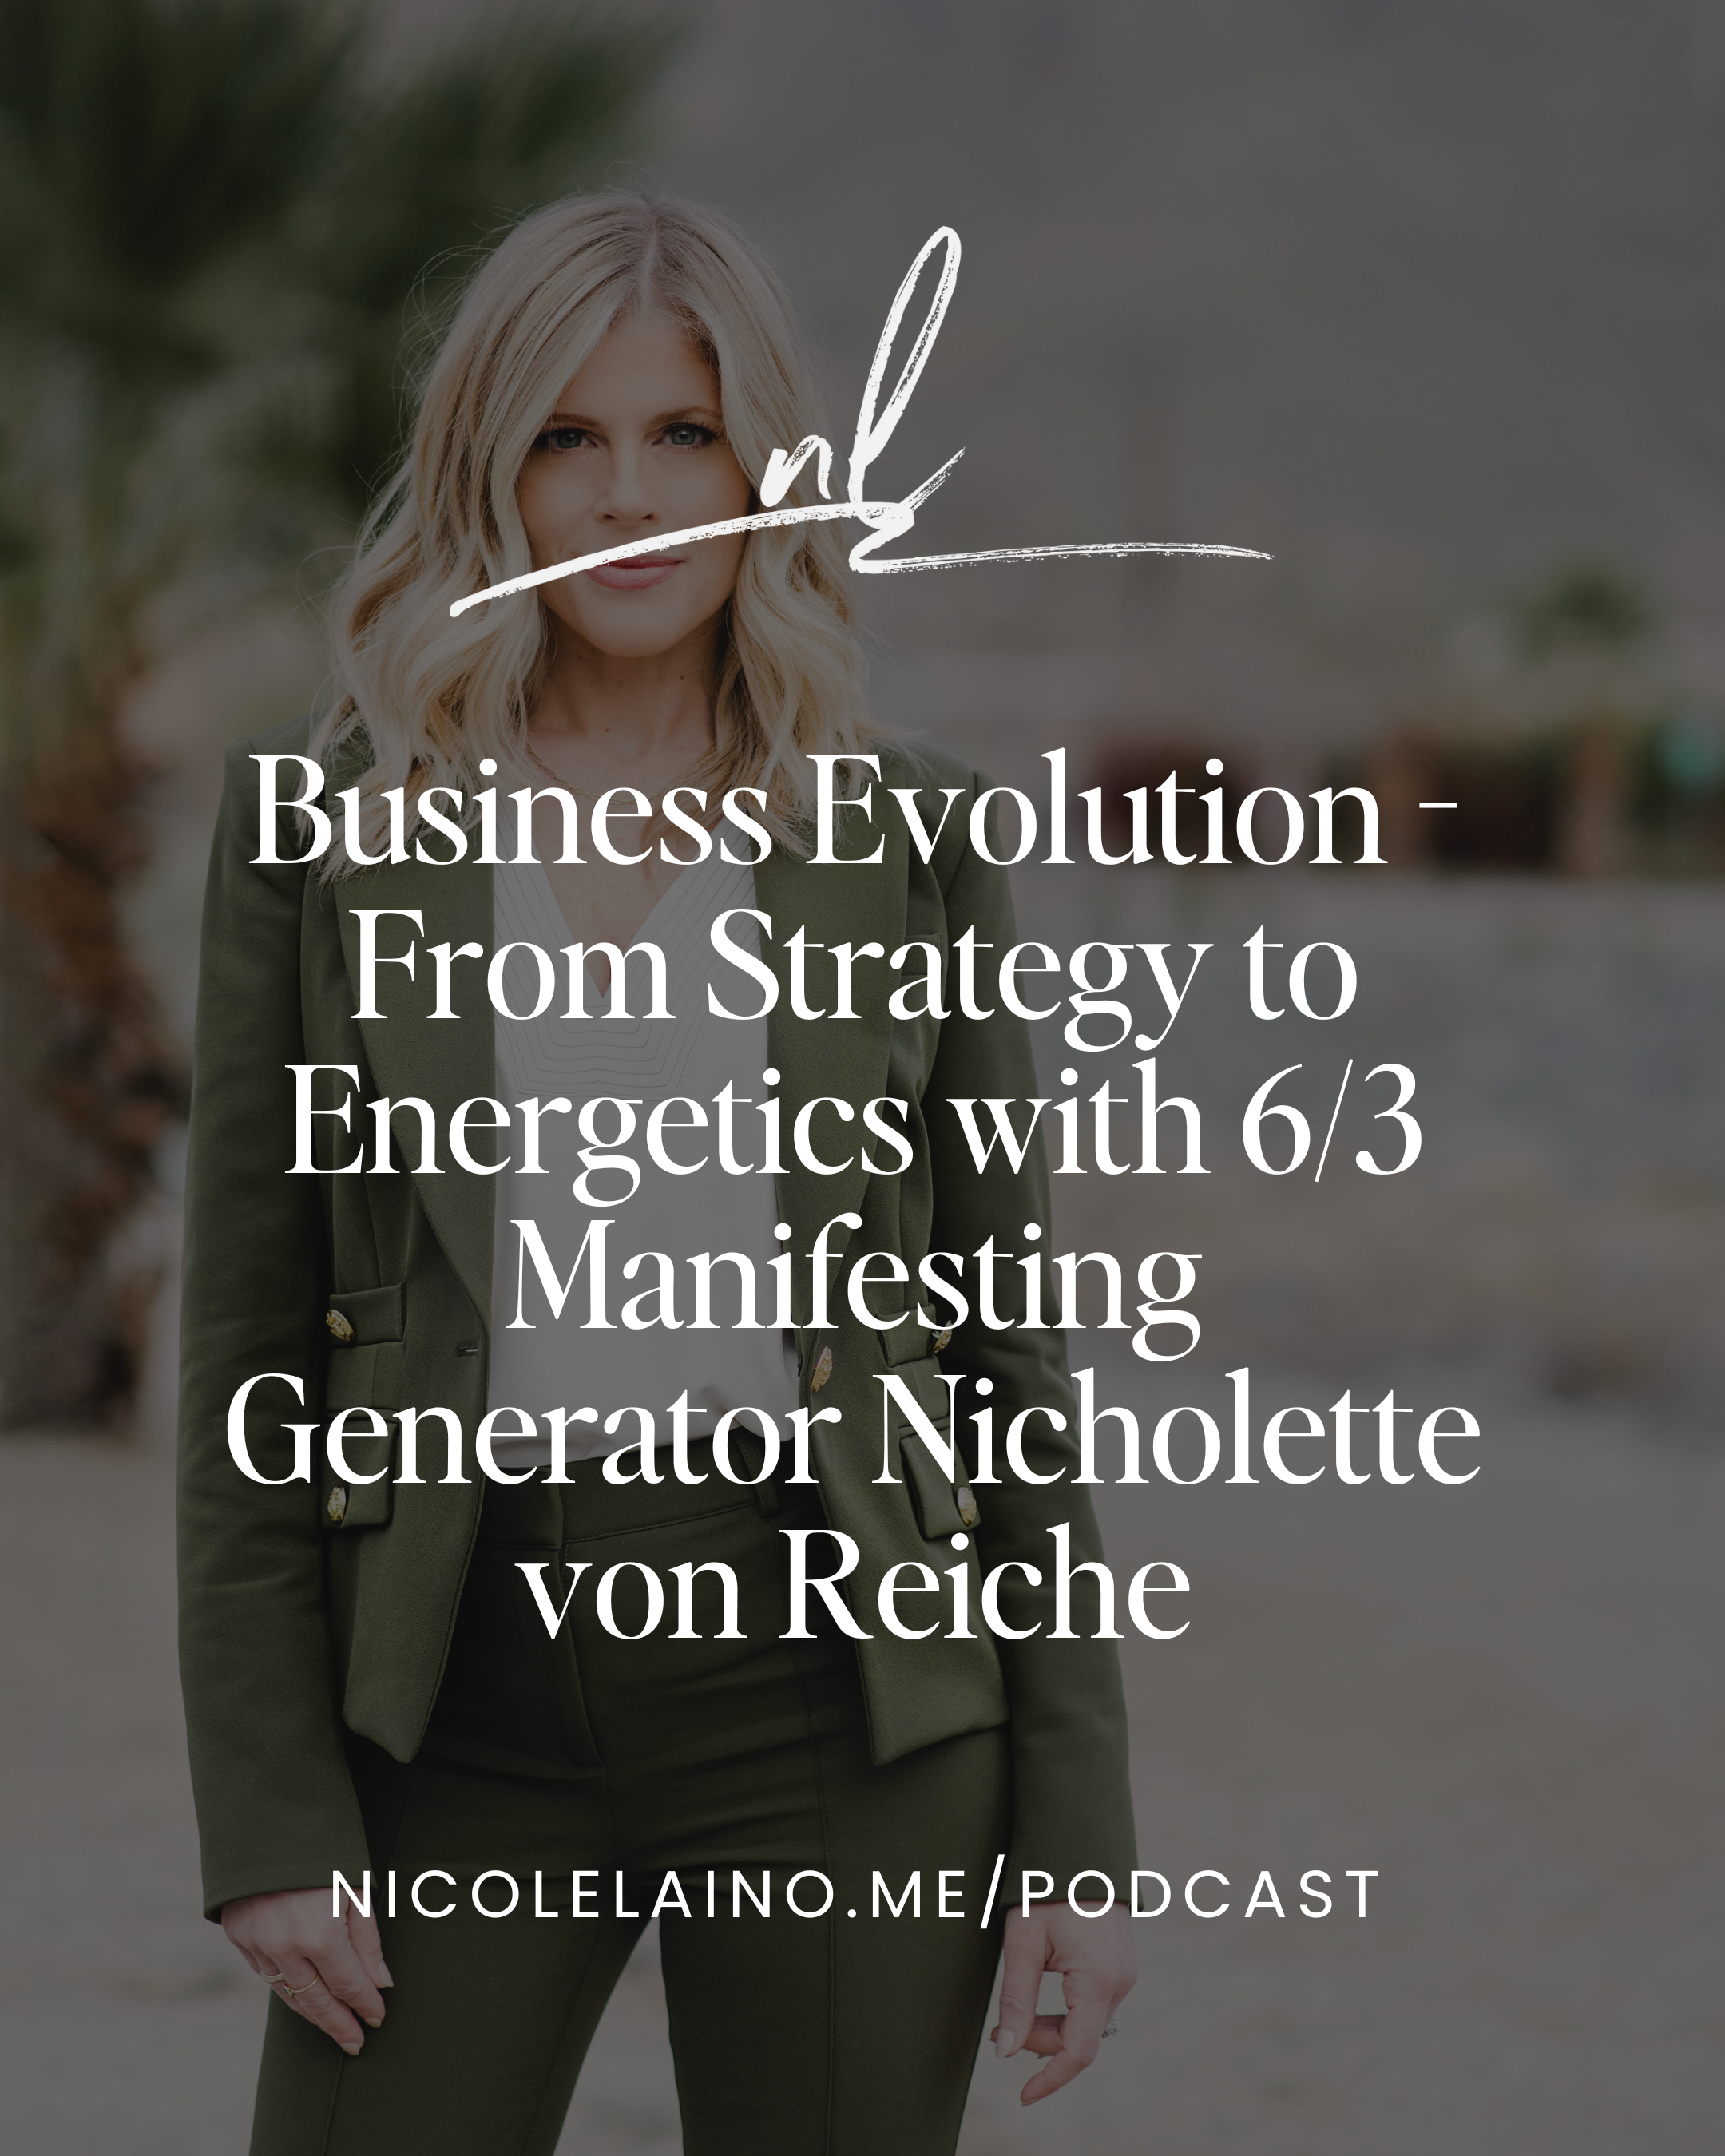 Business Evolution - From Strategy to Energetics with 6/3 Manifesting Generator Nicholette von Reiche